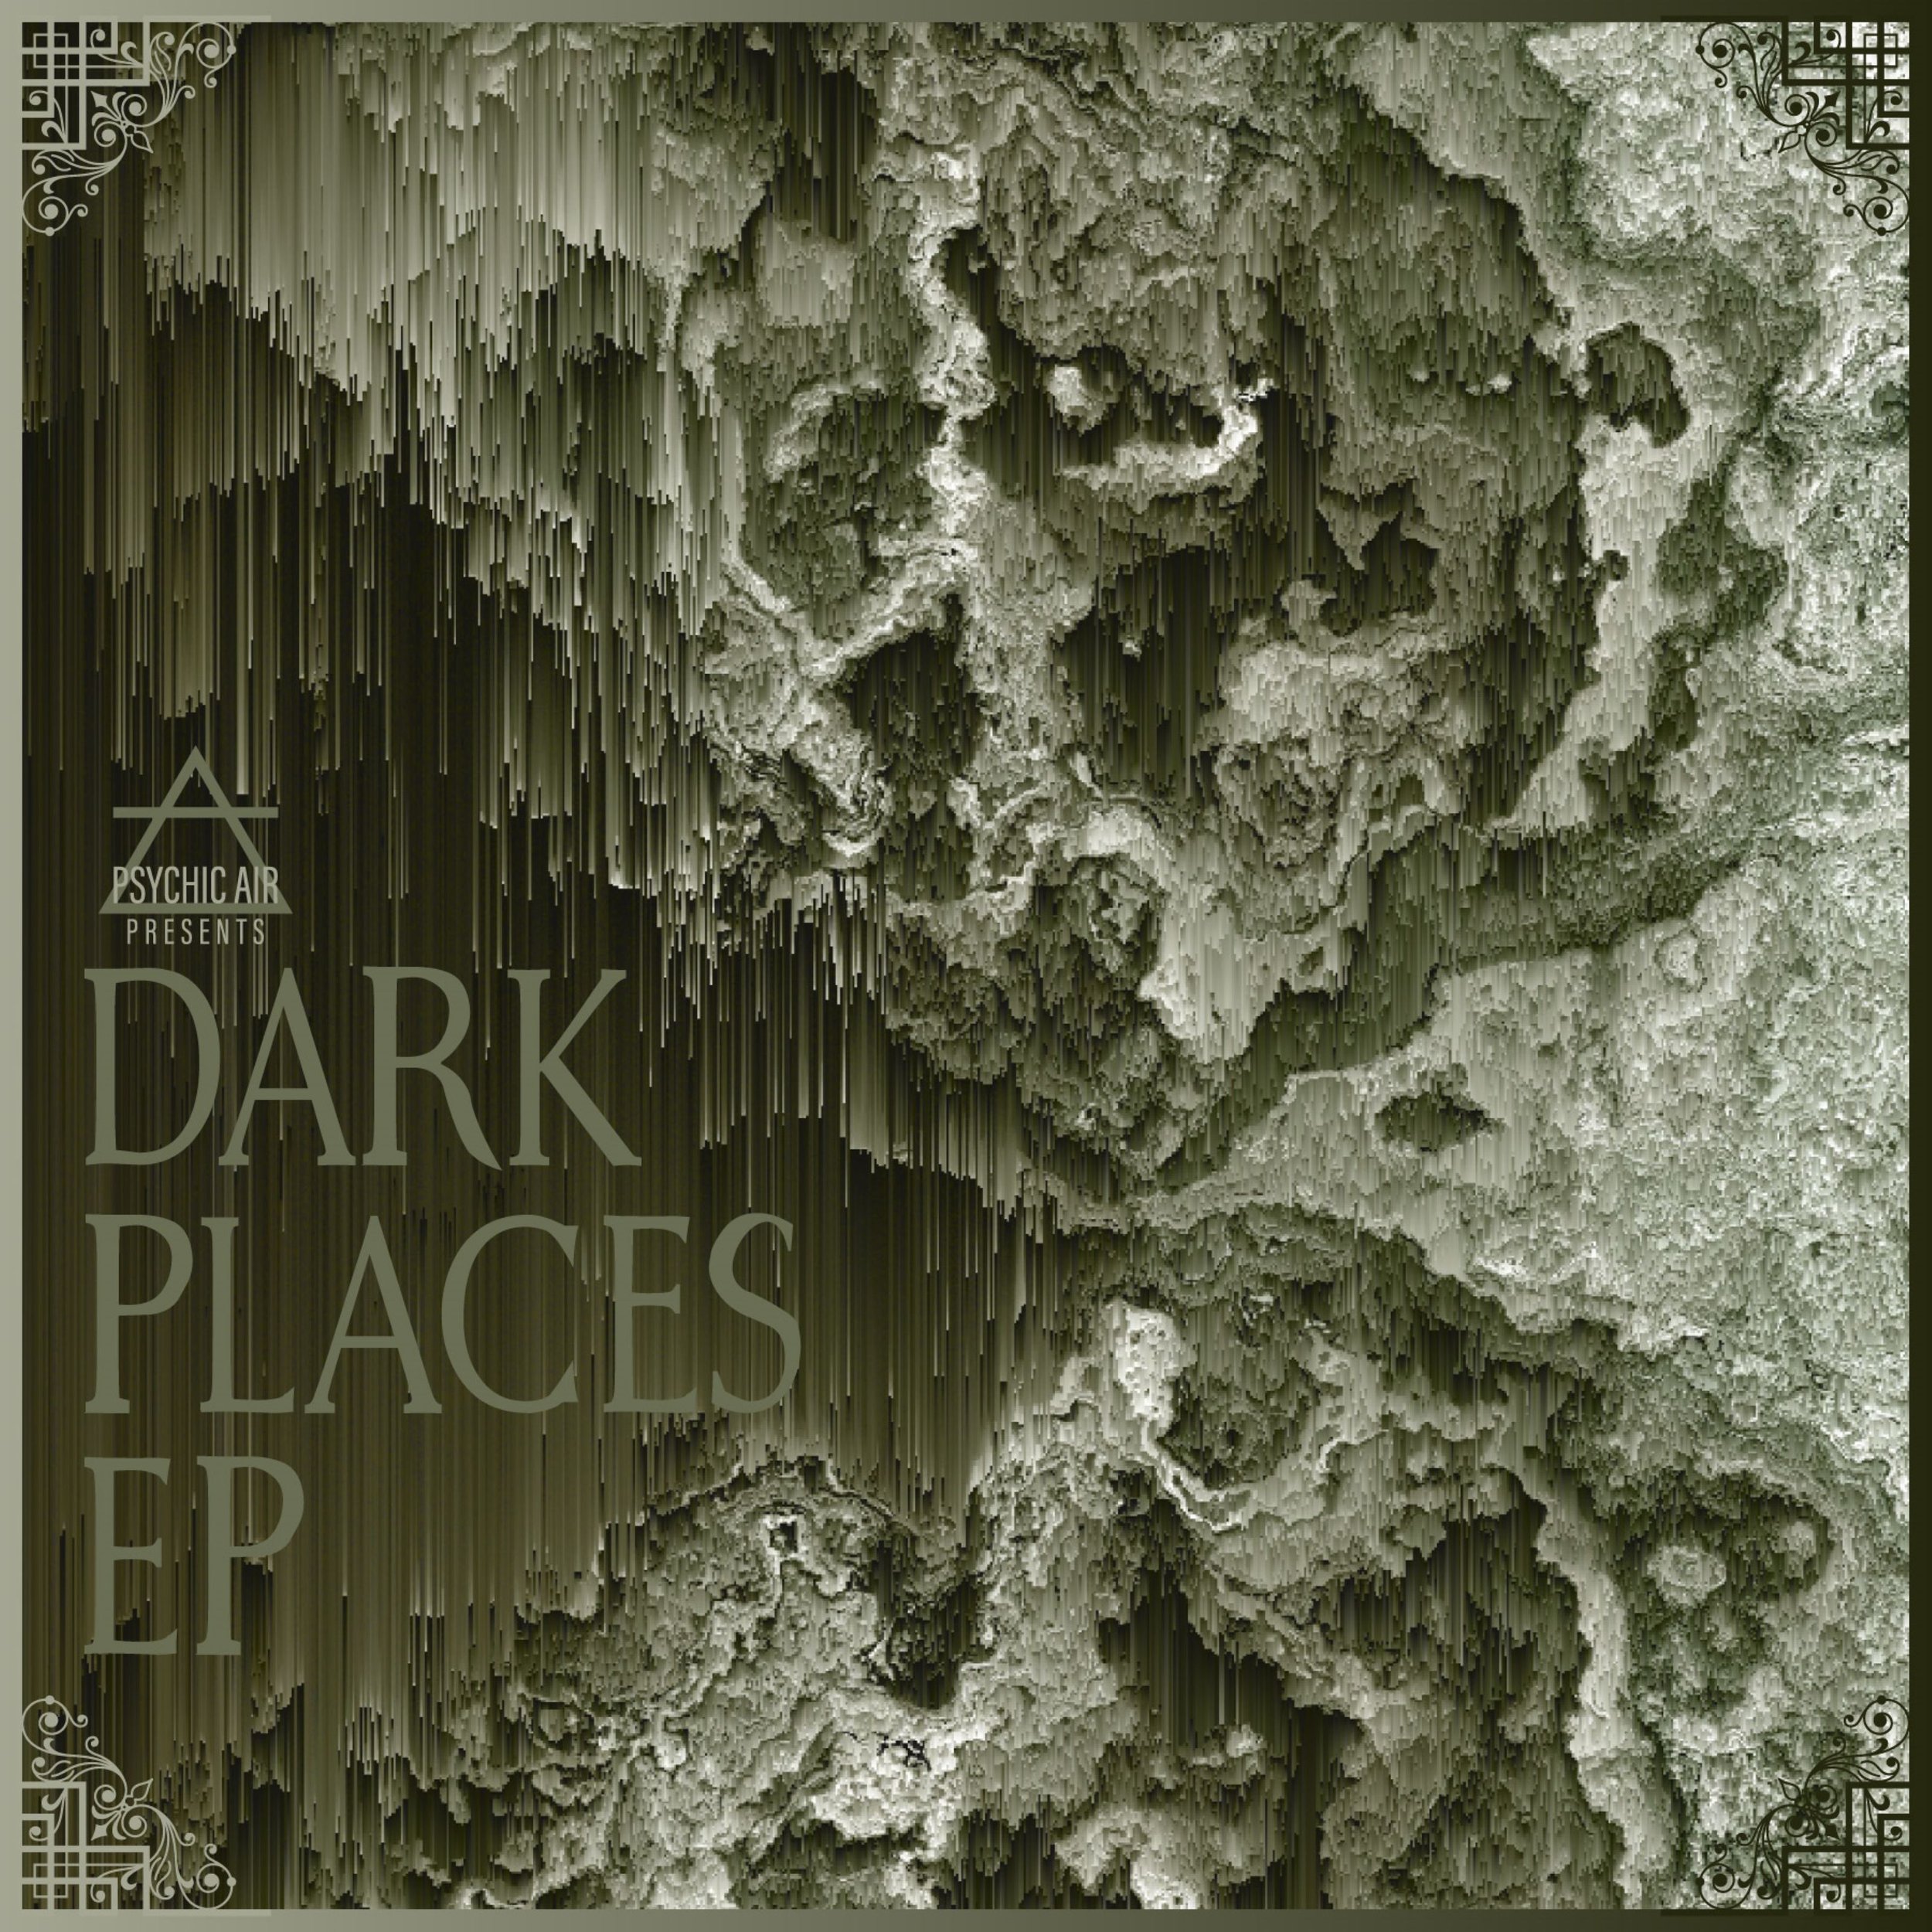 Dark Places EP cover art.jpg